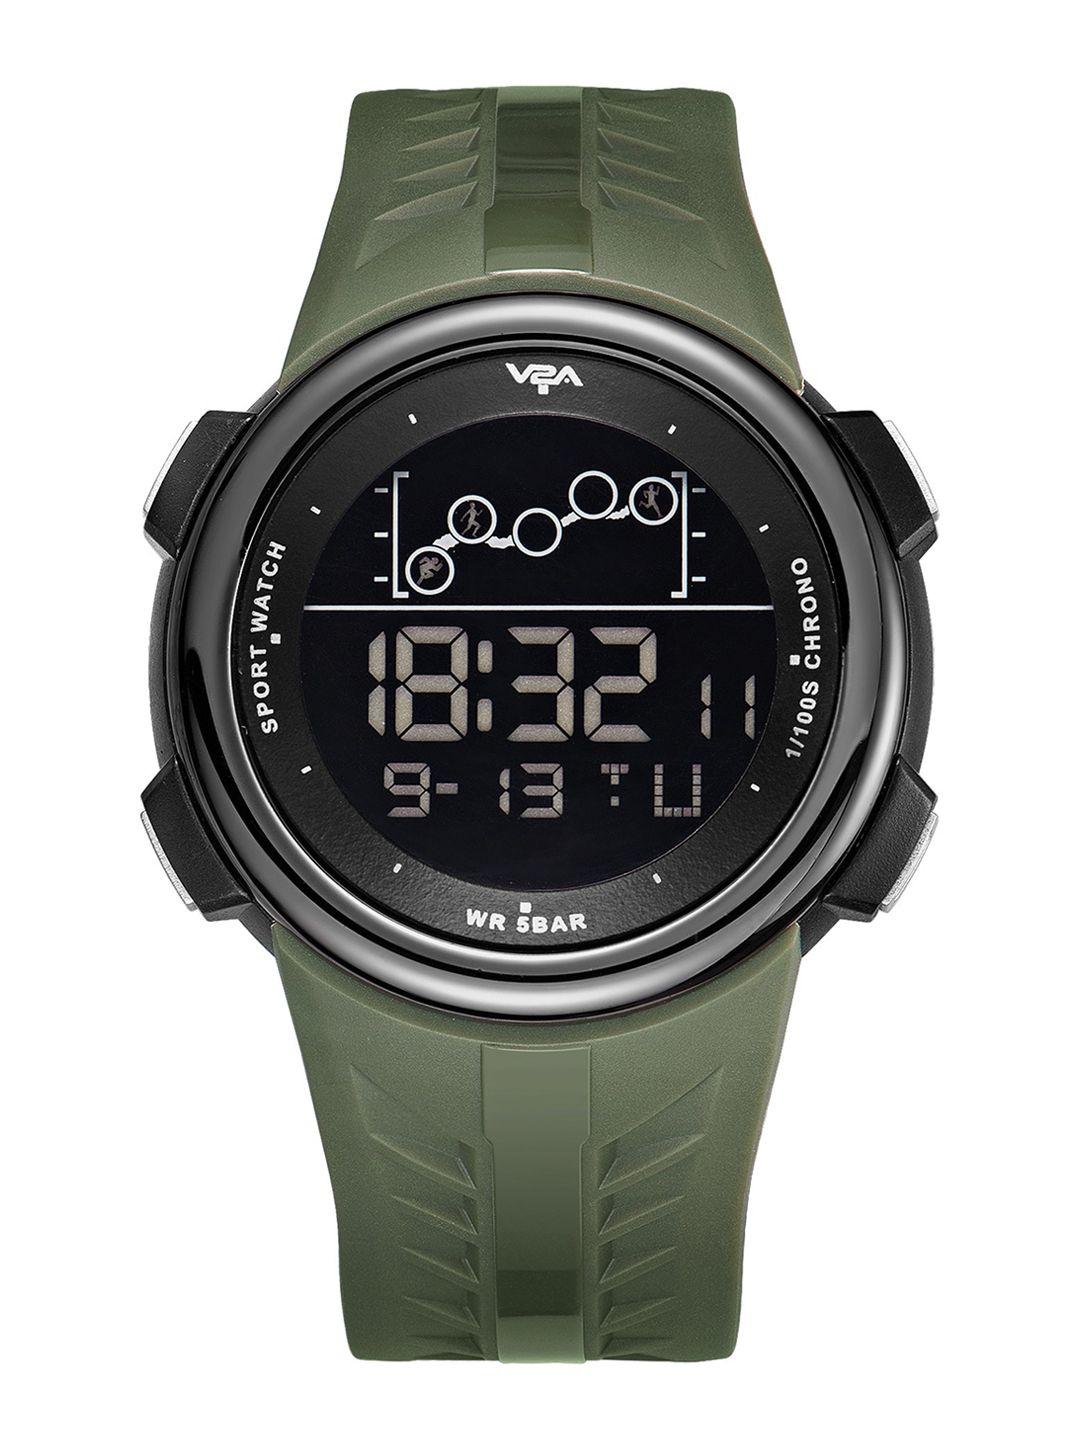 v2a men black dial & green straps digital multi function watch v2a-dm1703